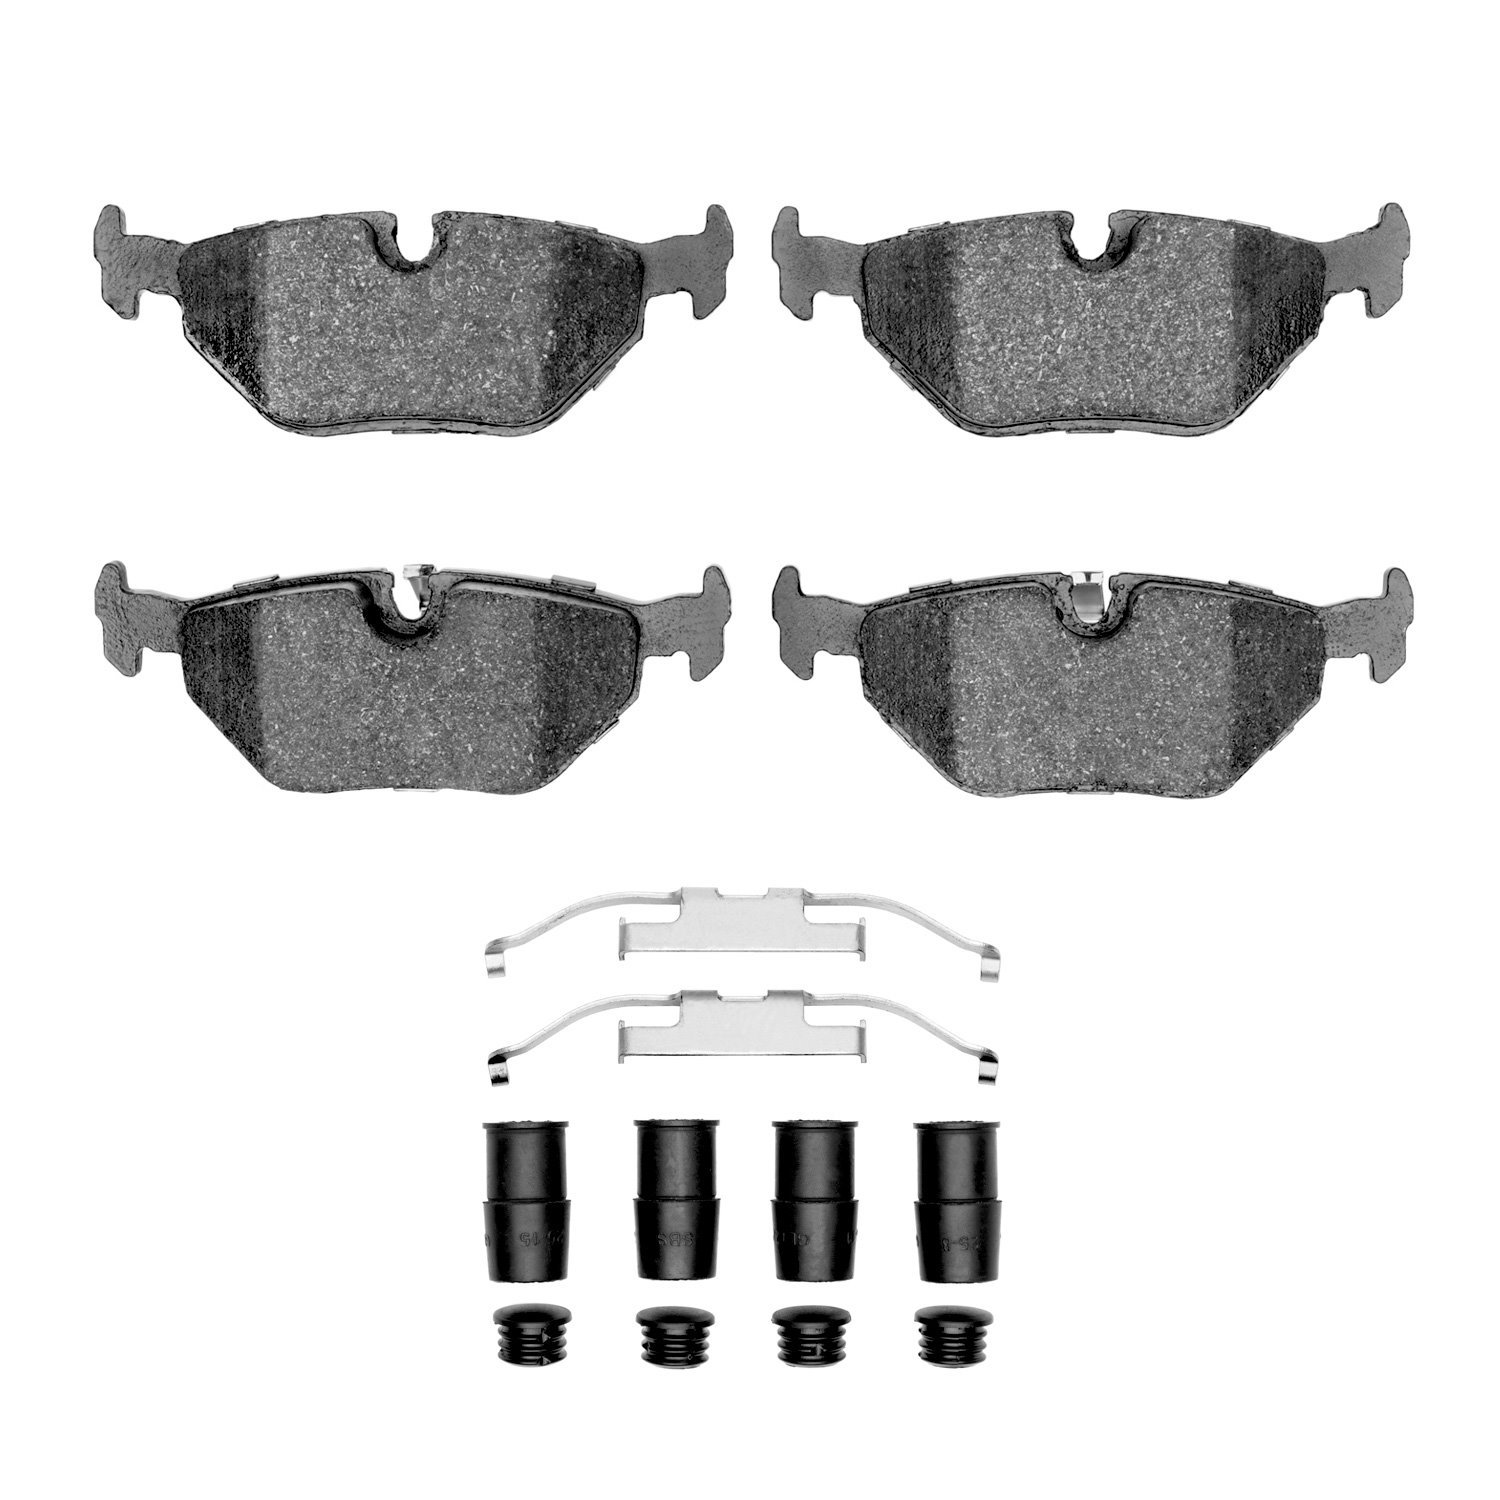 1551-0692-01 5000 Advanced Low-Metallic Brake Pads & Hardware Kit, 1996-2000 BMW, Position: Rear